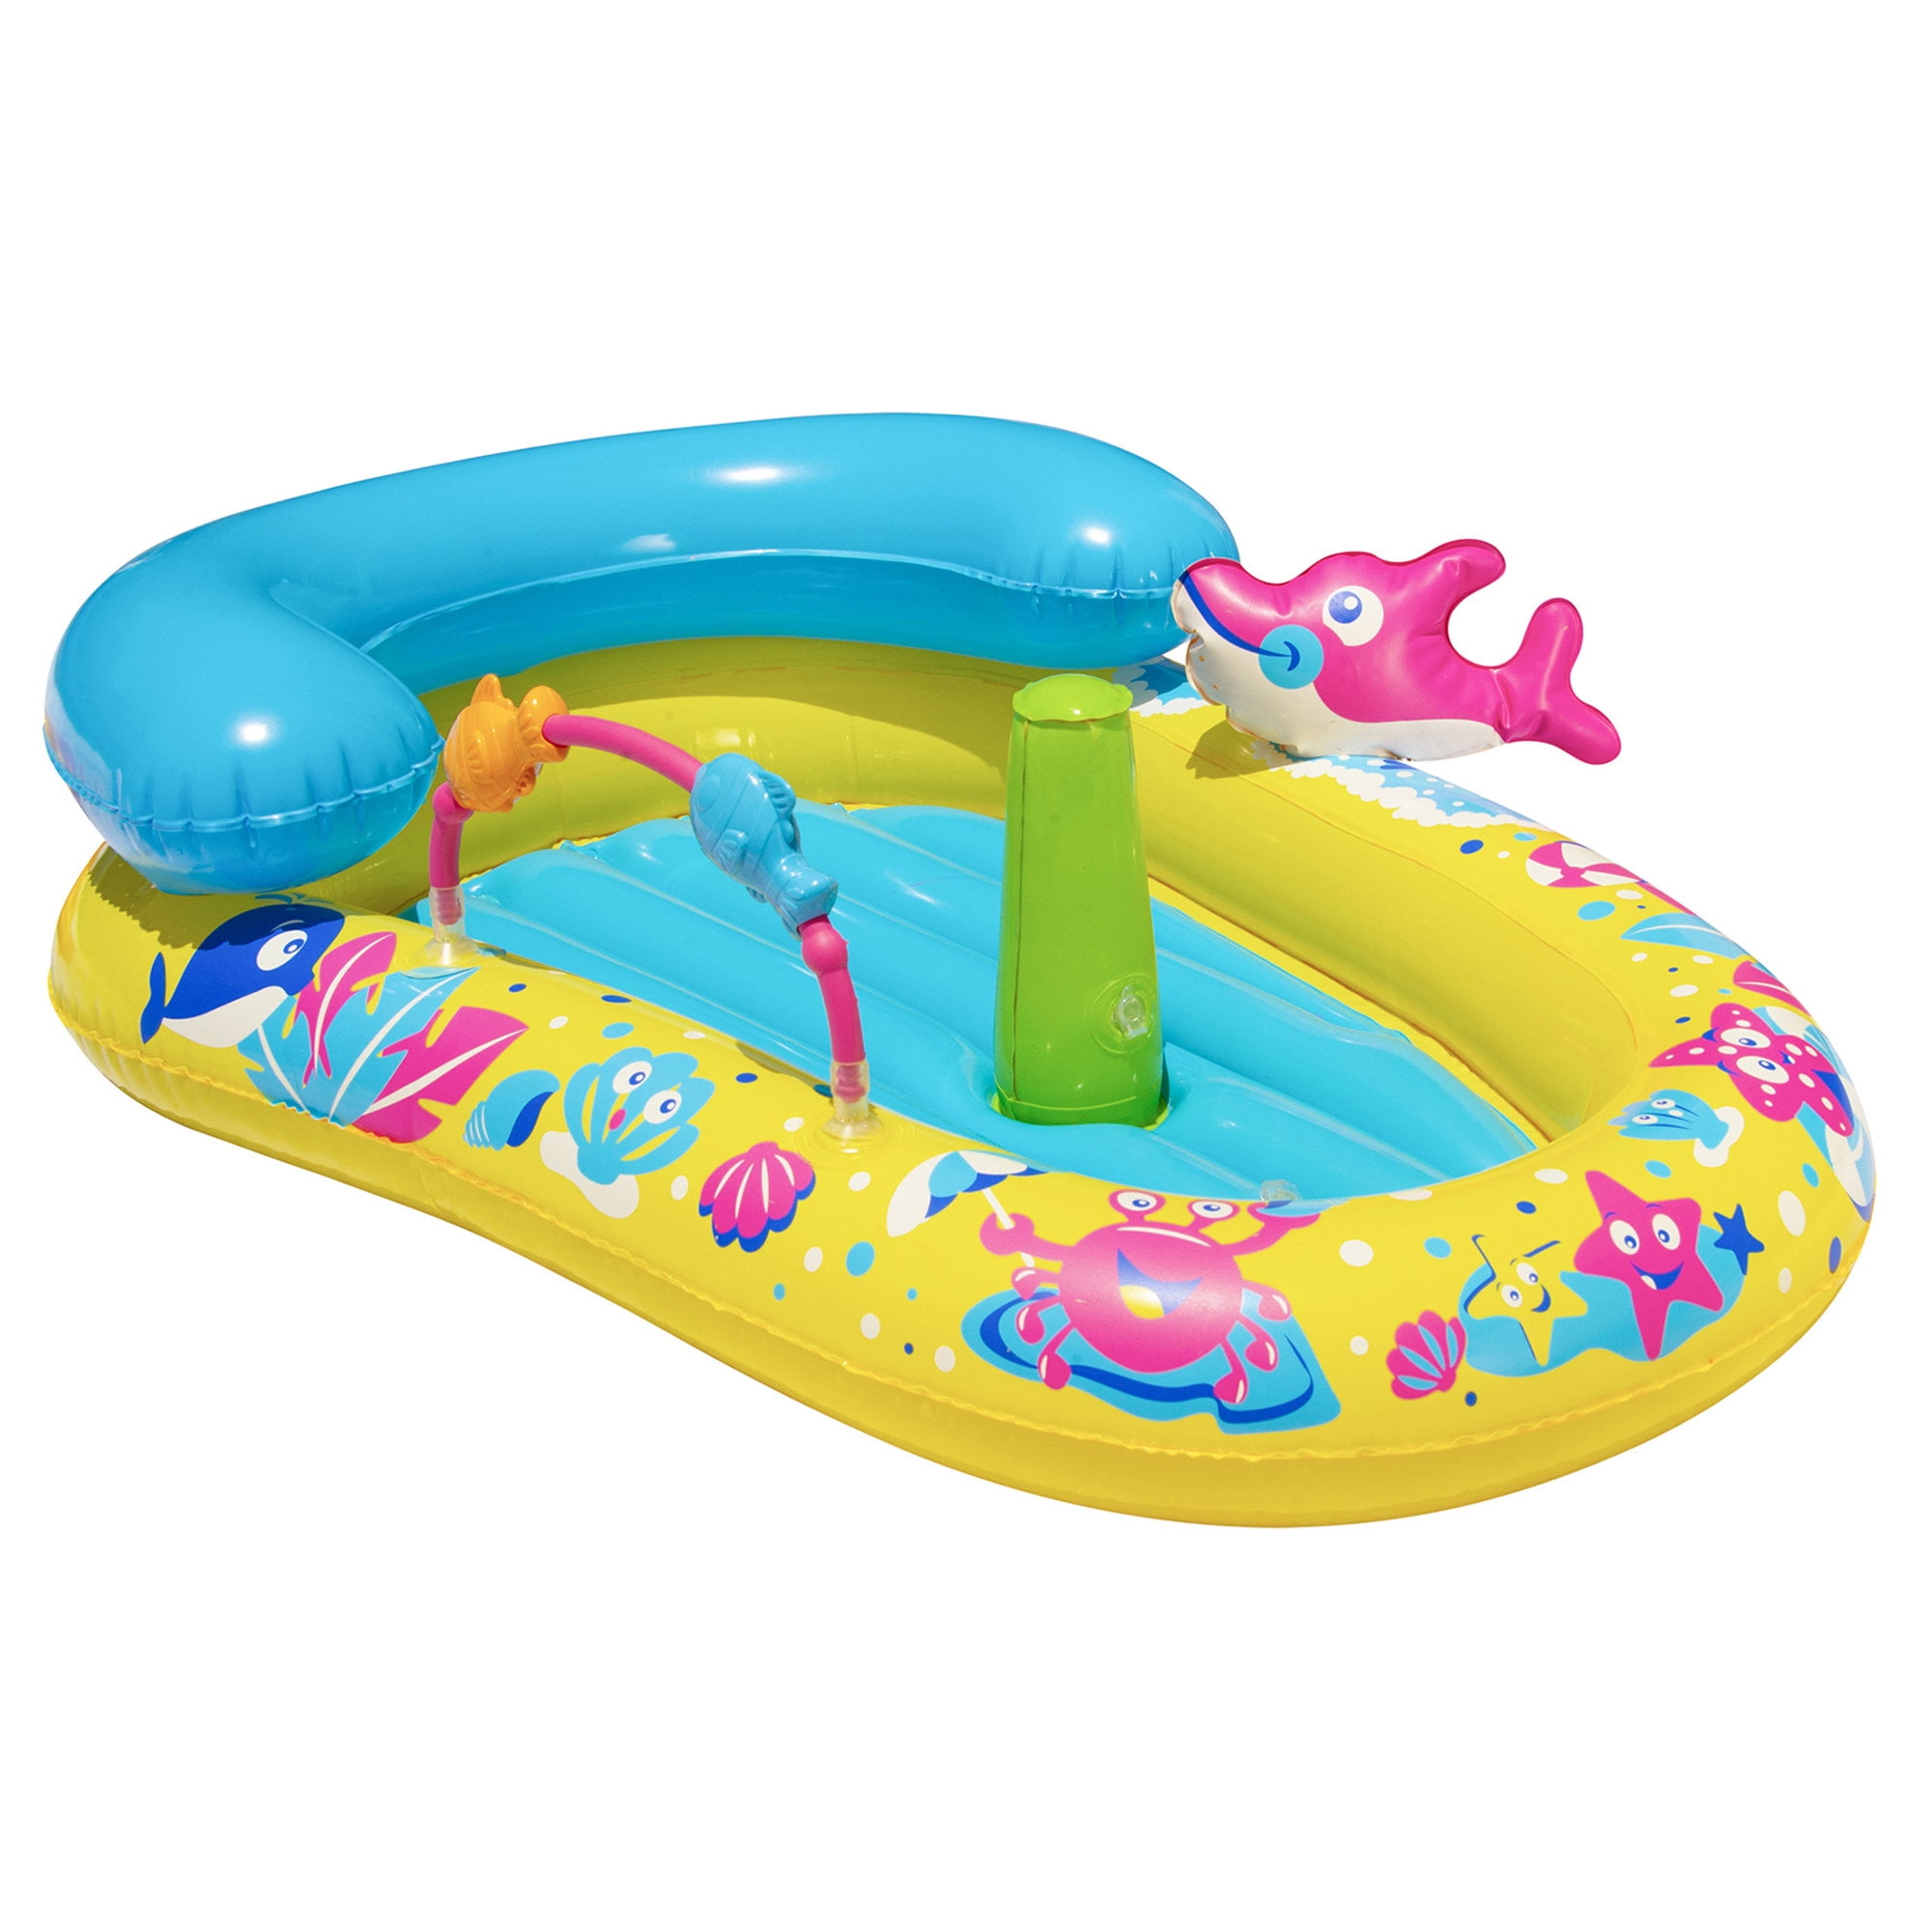 Intex My Baby Float Swimming Aid Swim Seat 6-12 months old Fast Free UK Post 